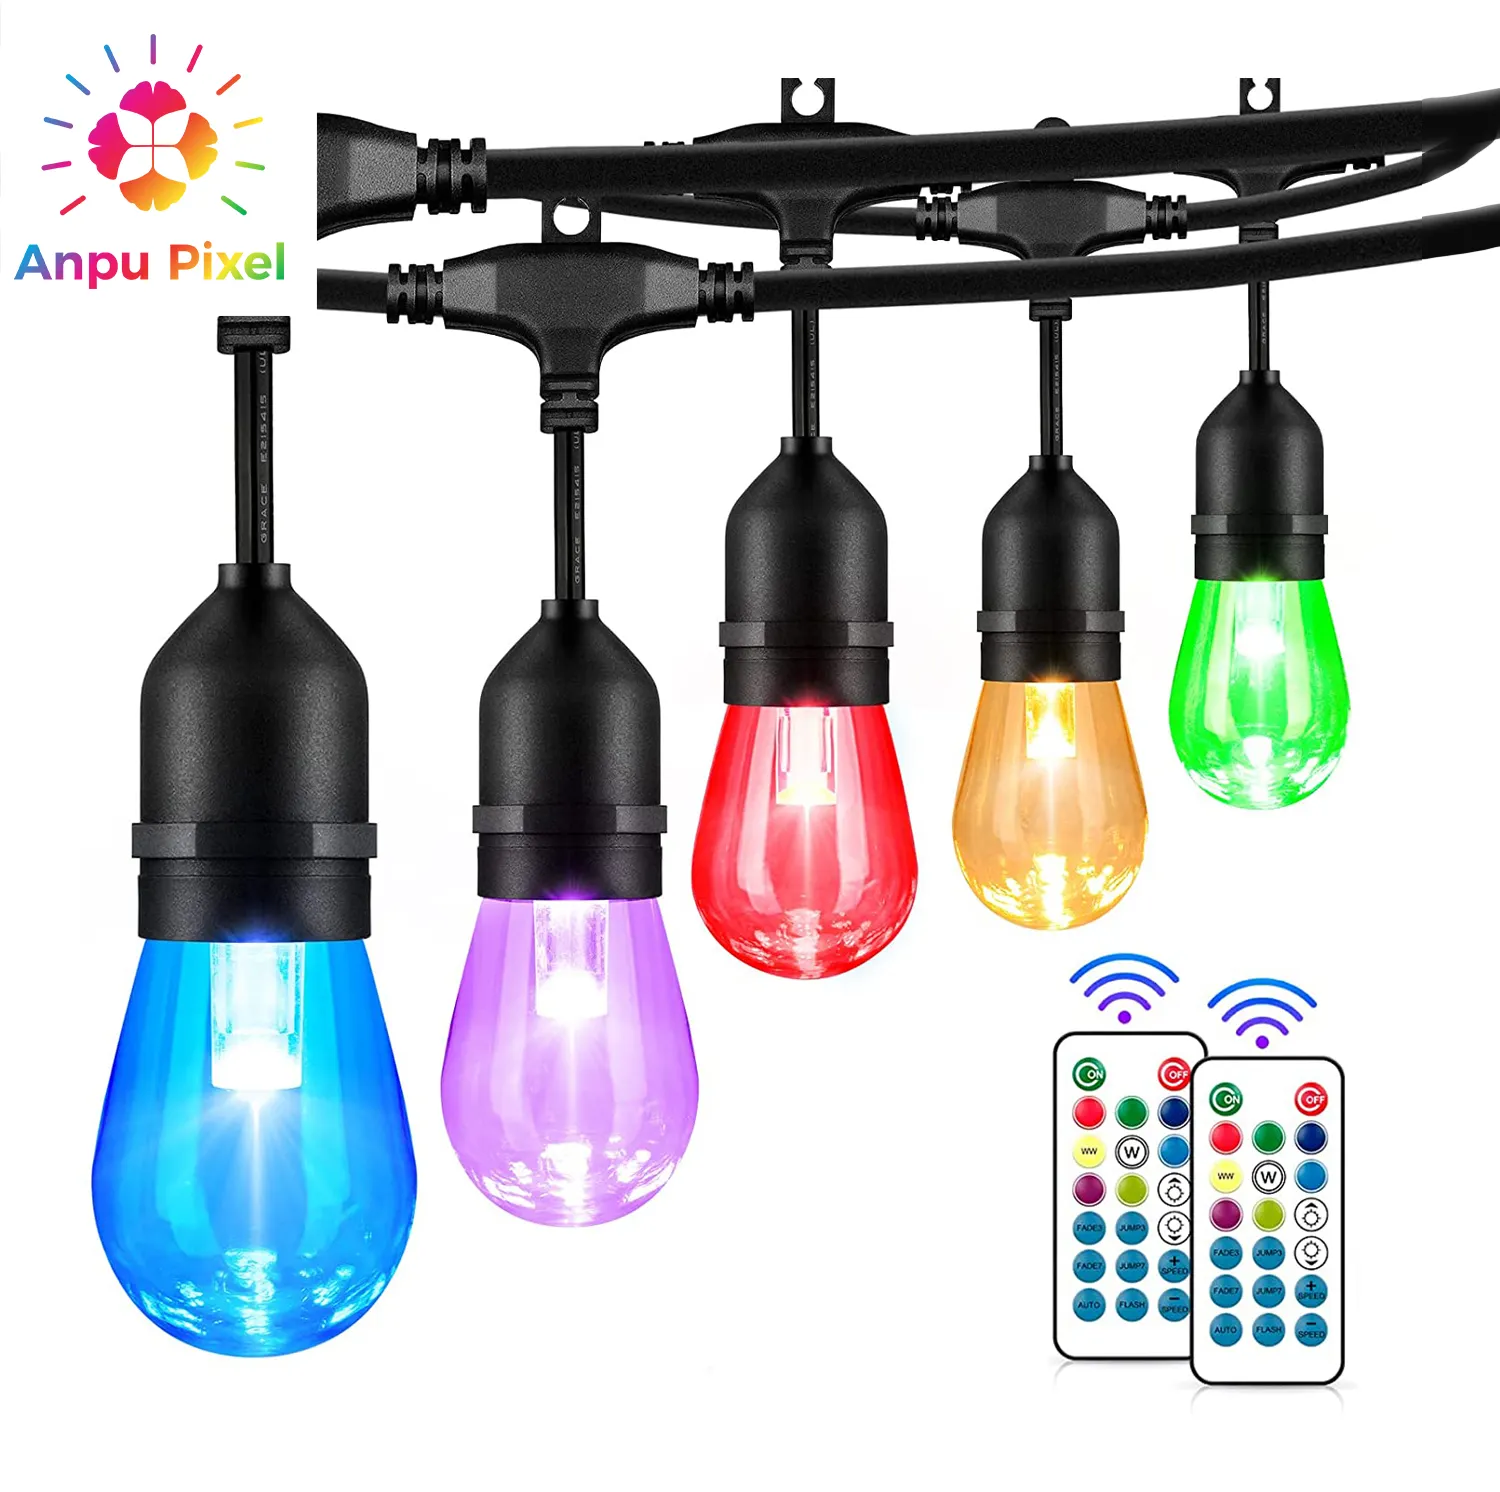 ANPU Pixel Camping Decorative Outdoor String Lights Plug in s14 Bulbs IP65 Waterproof Patio Lights RGB Festoon Lights